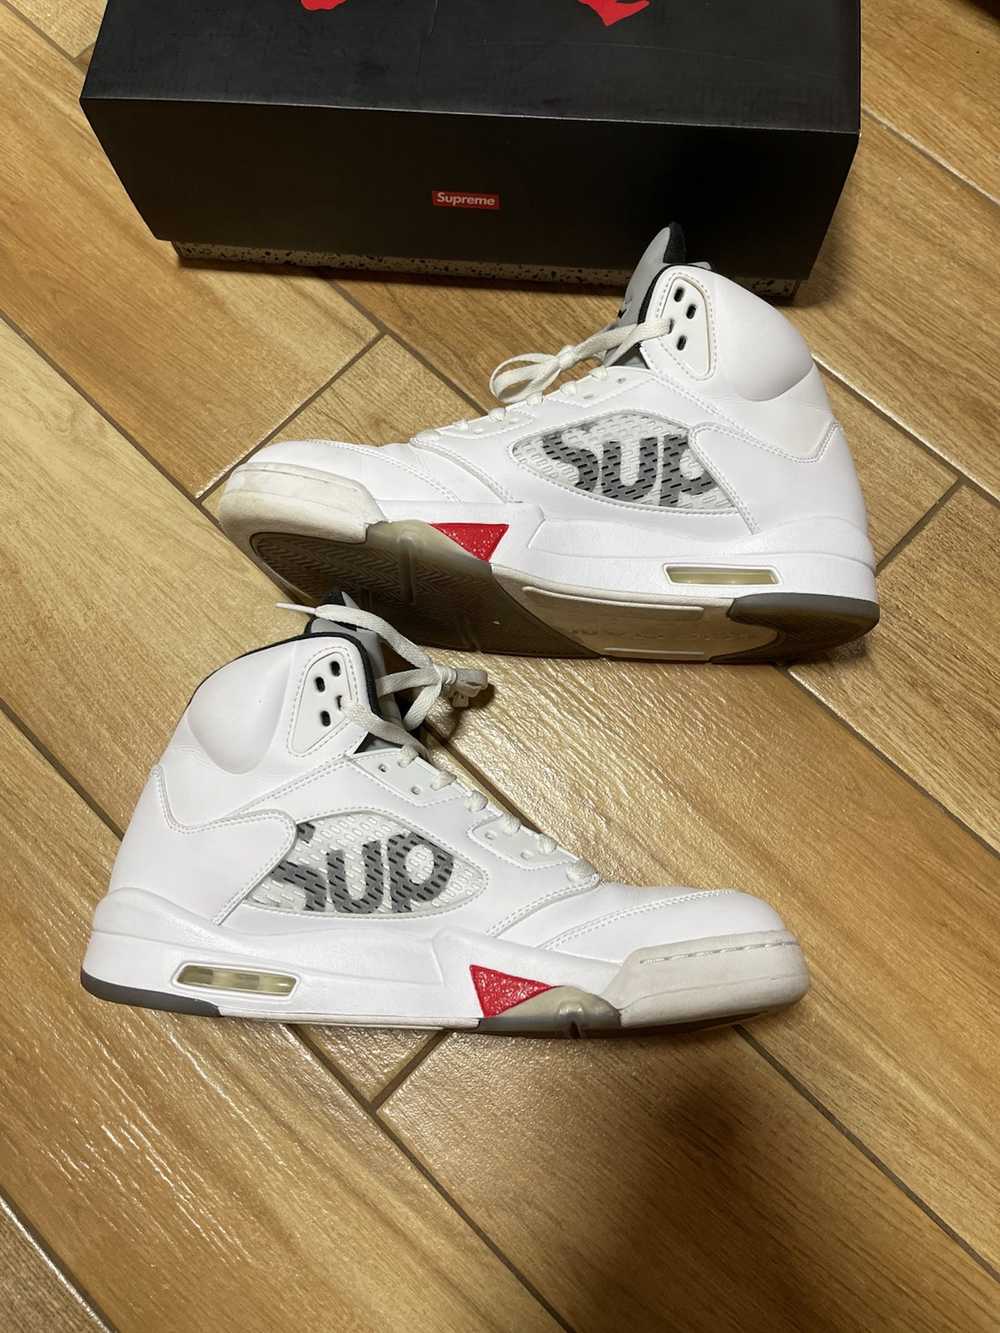 Jordan Brand × Supreme Jordan 5 x Supreme “White” - image 3